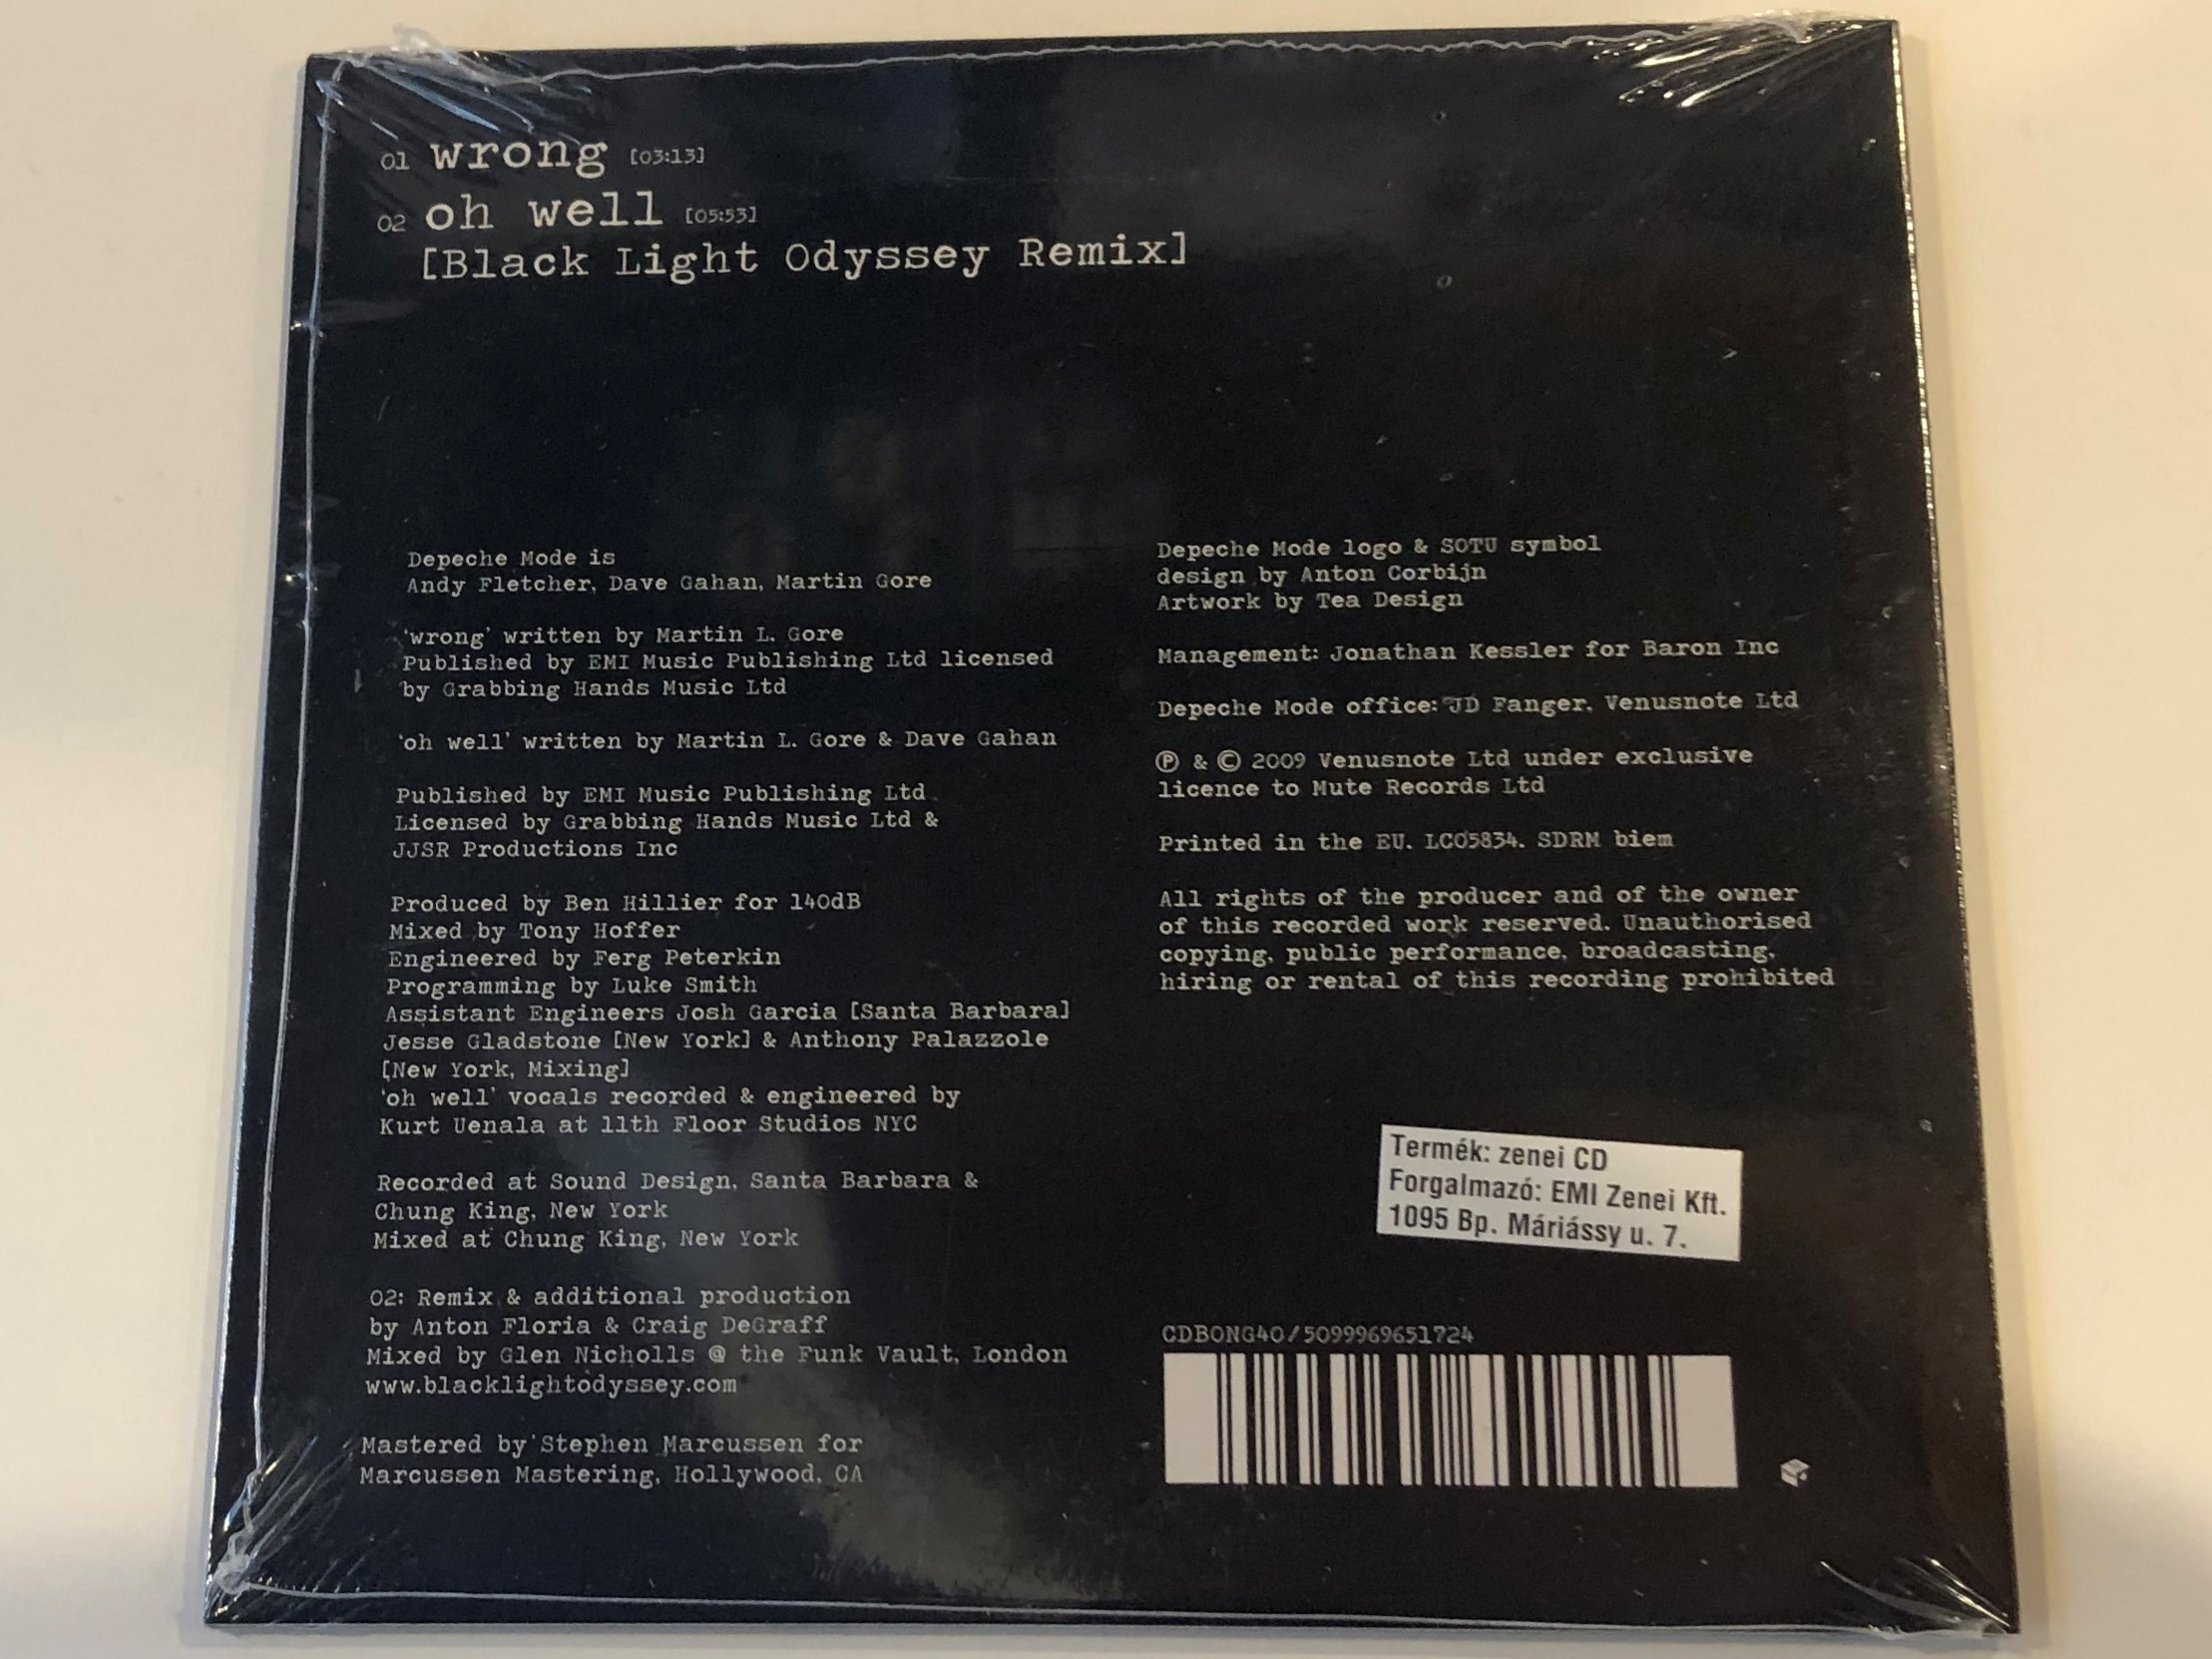 depeche-mode-wrong-venusnote-ltd.-audio-cd-2009-5099969651724-2-.jpg